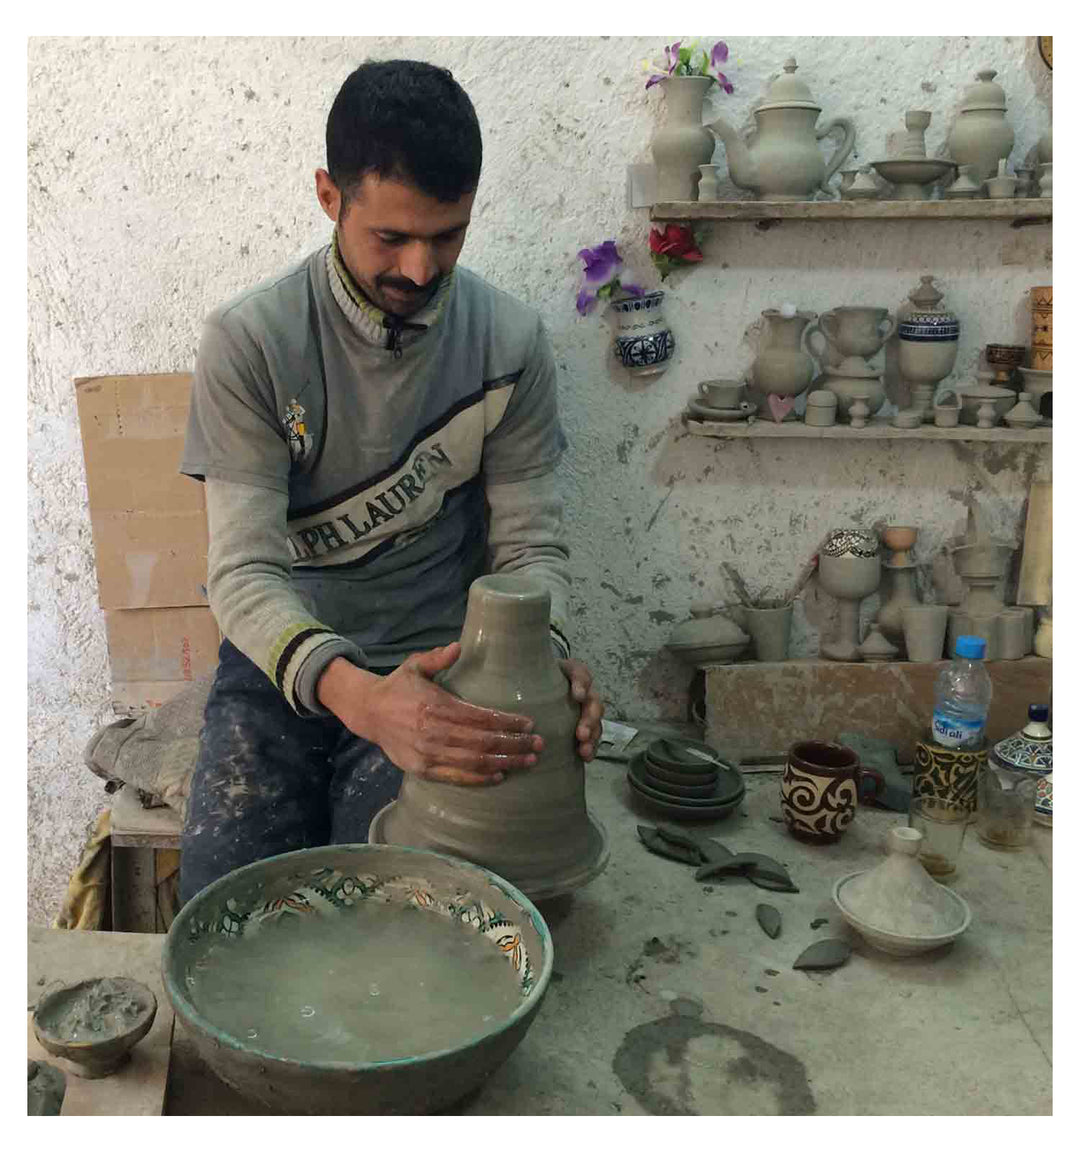 Moroccan ceramic sink Fes33